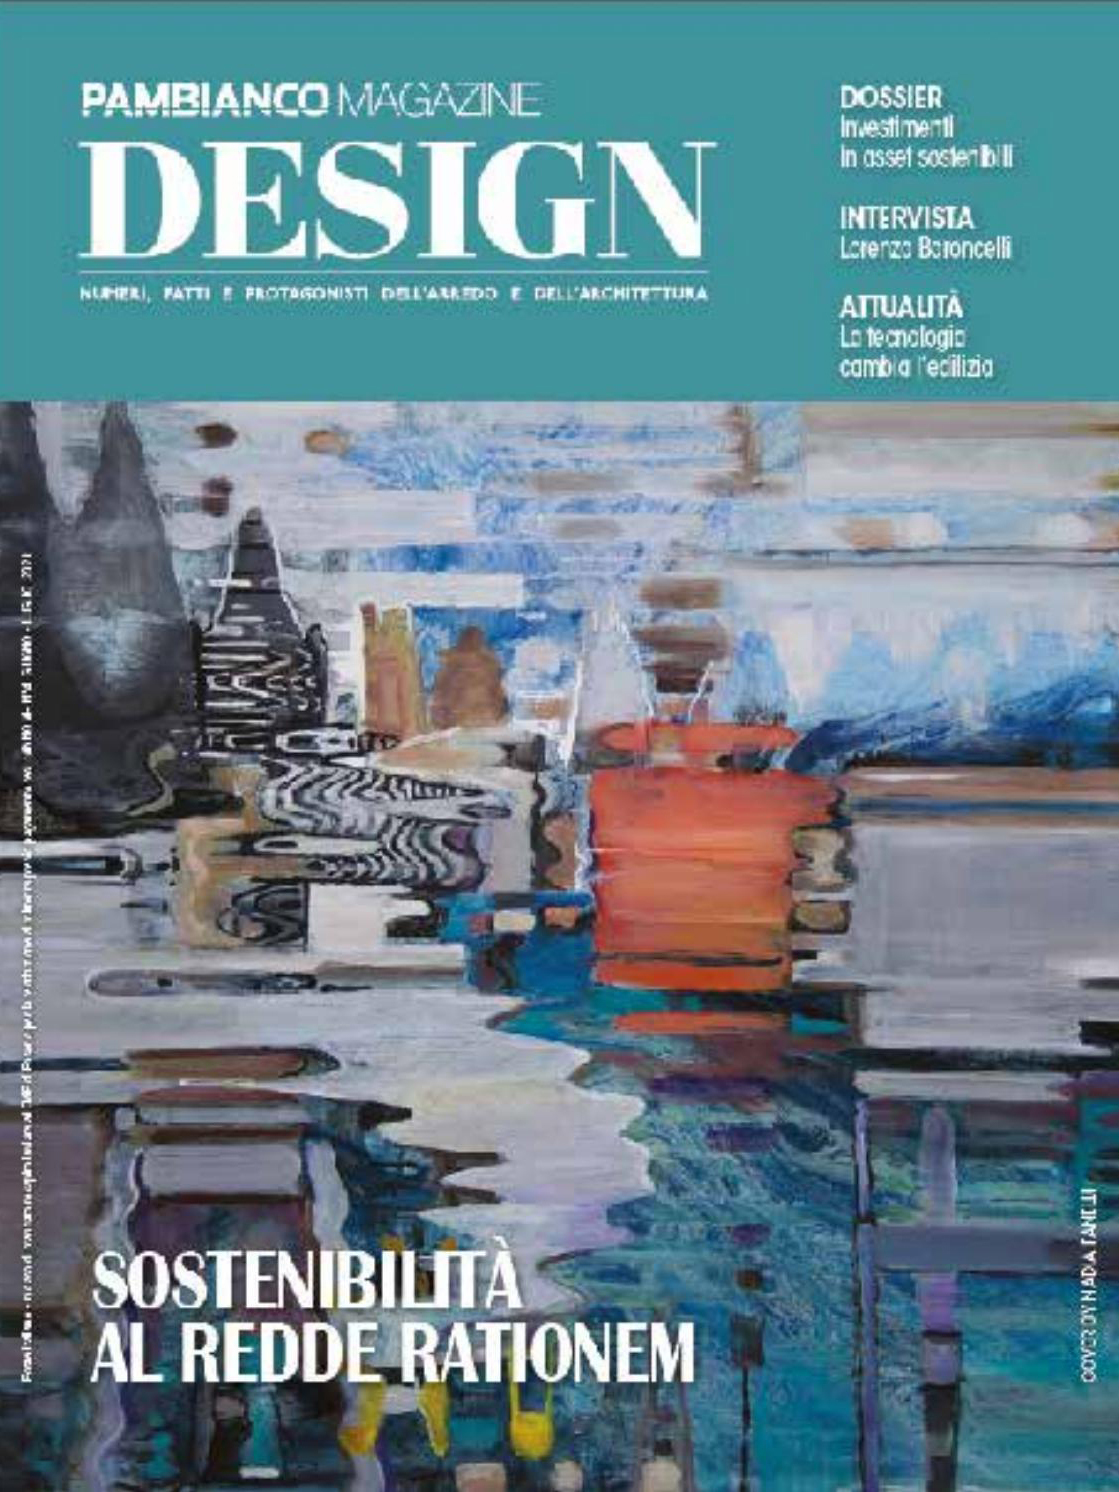 《Pambianco Design》意大利室内设计流行趋势杂志2021年06-07月号